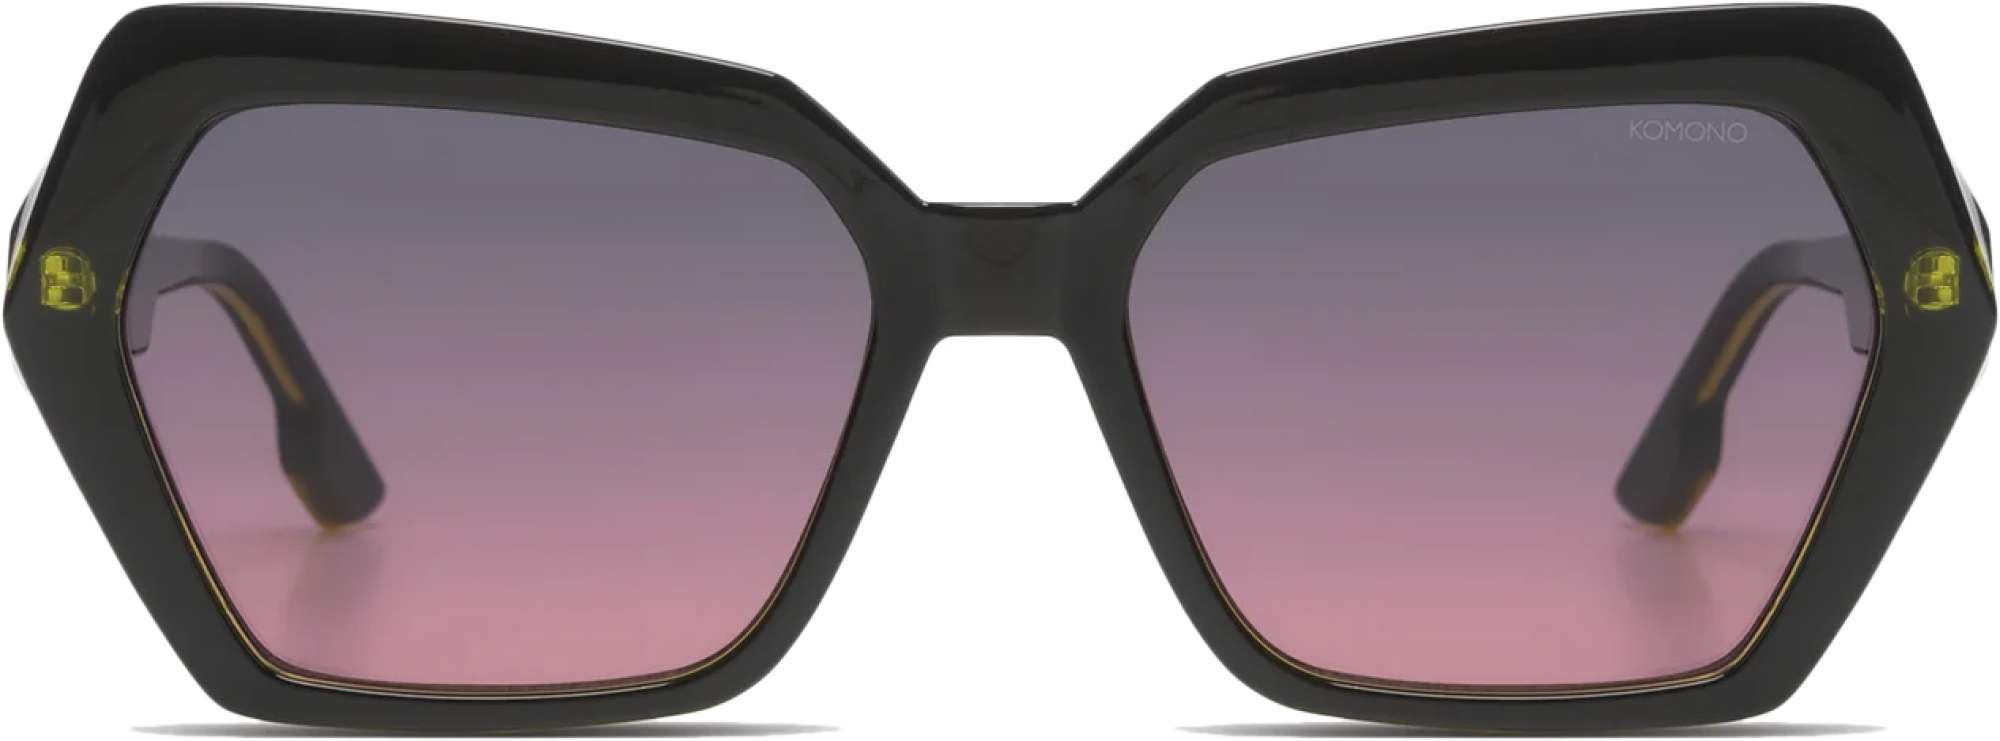 Afbeelding van Komono Poly matrix sunglasses